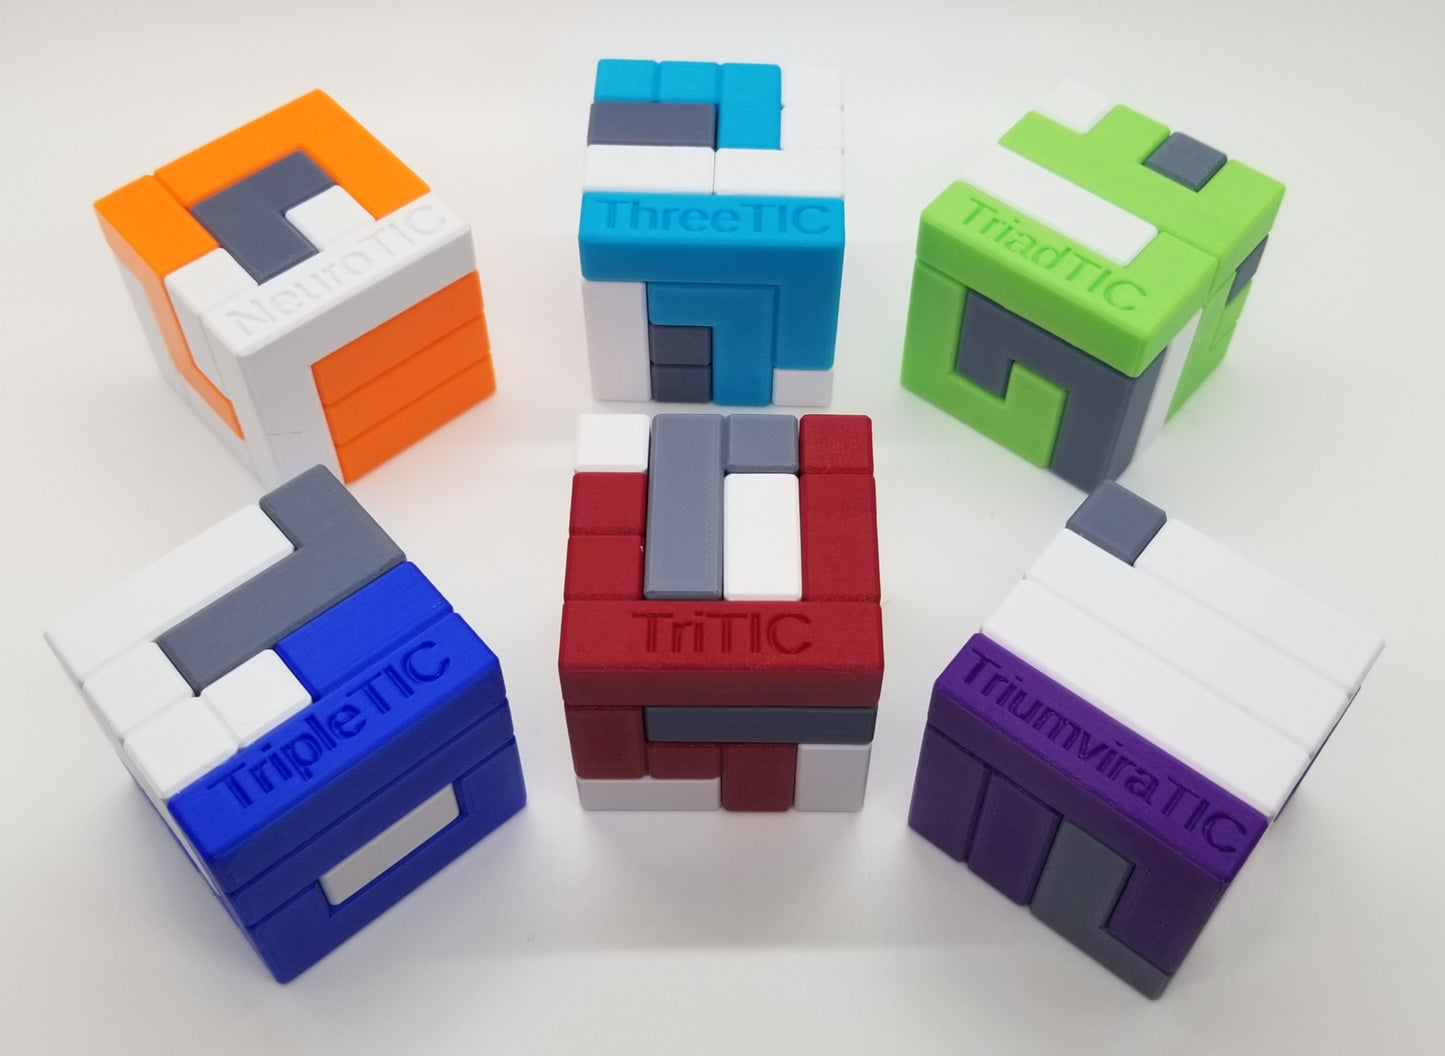 Three Piece Turning Interlocking Cube Series - 3D Printed TIC Puzzles